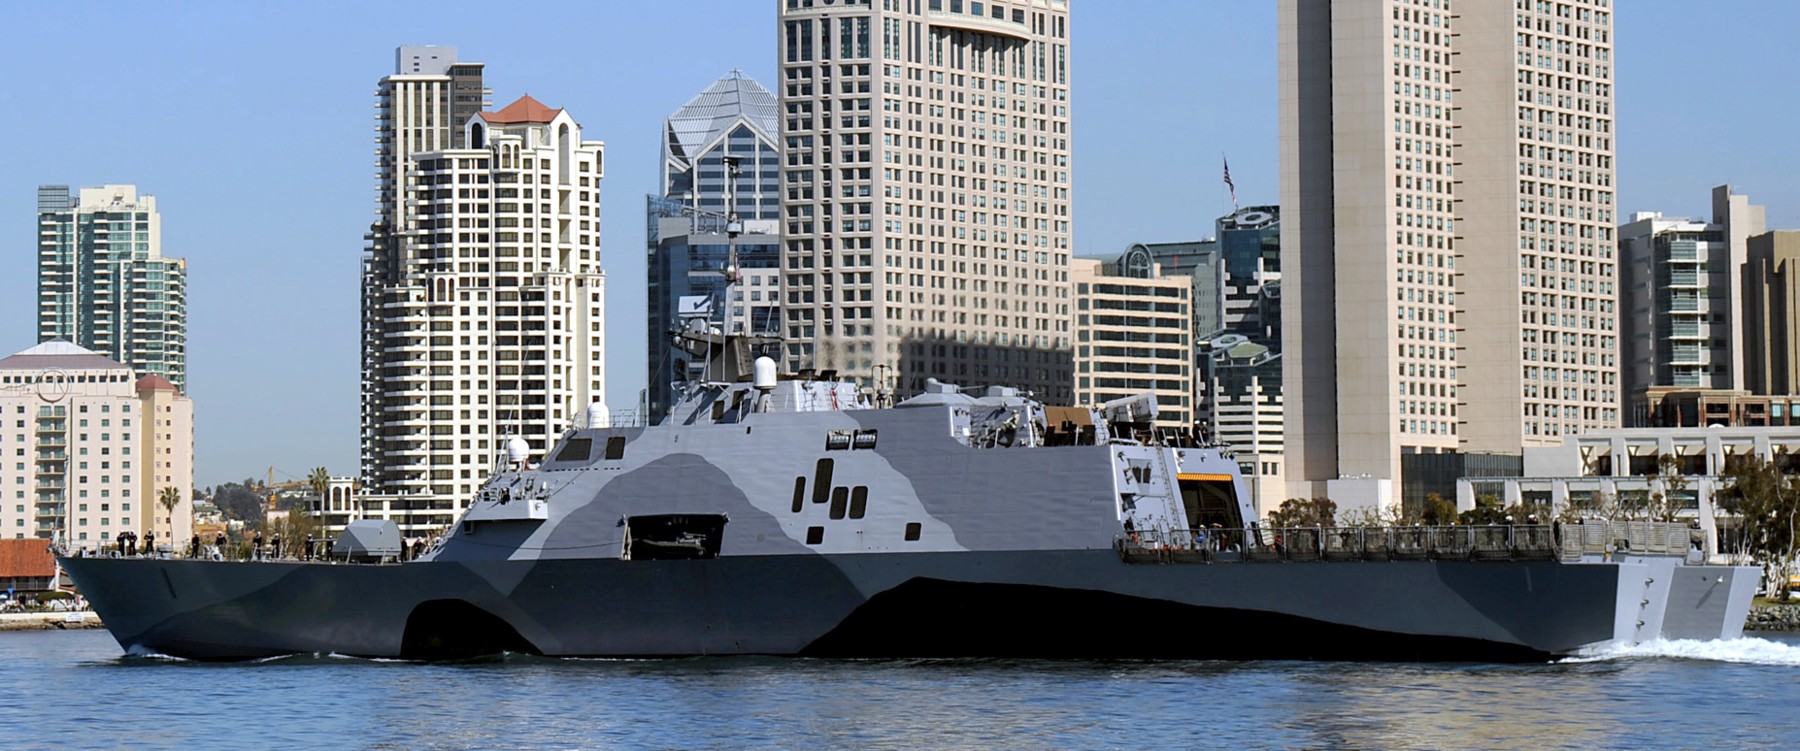 lcs-1 uss freedom class littoral combat ship us navy 44 san diego california